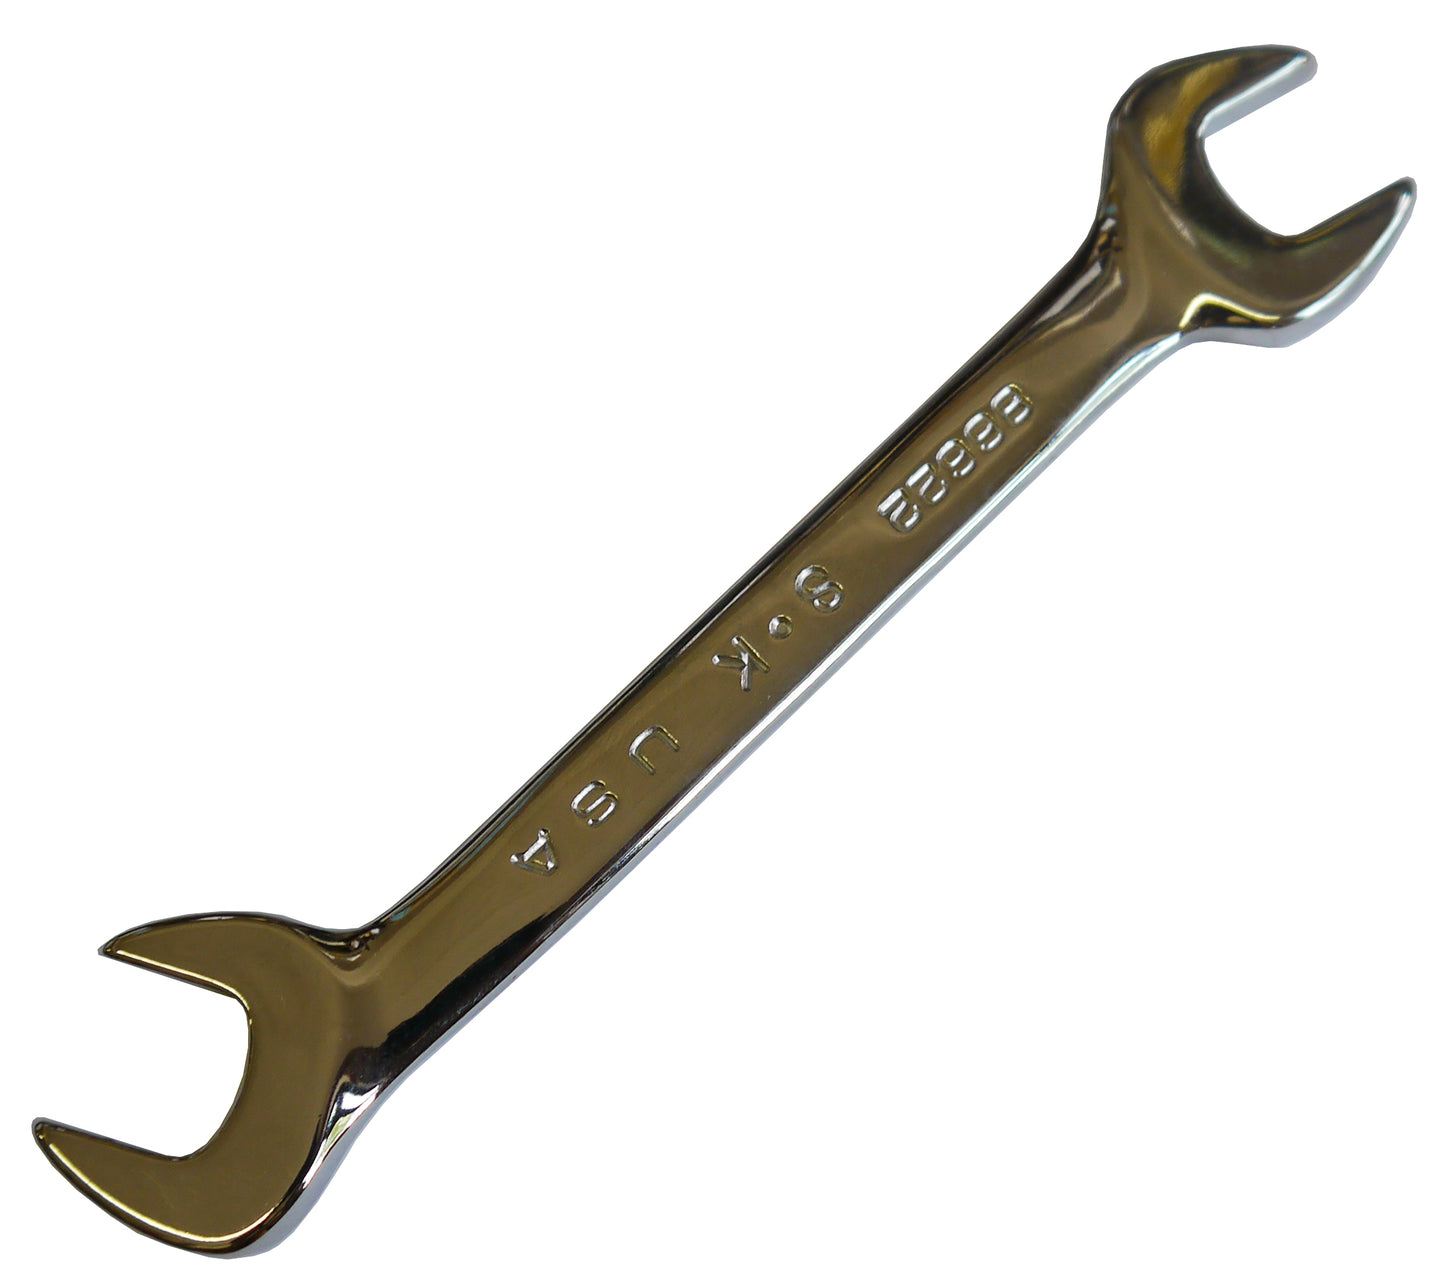 11/16  SK Full Polish Angle Wrench (86622)